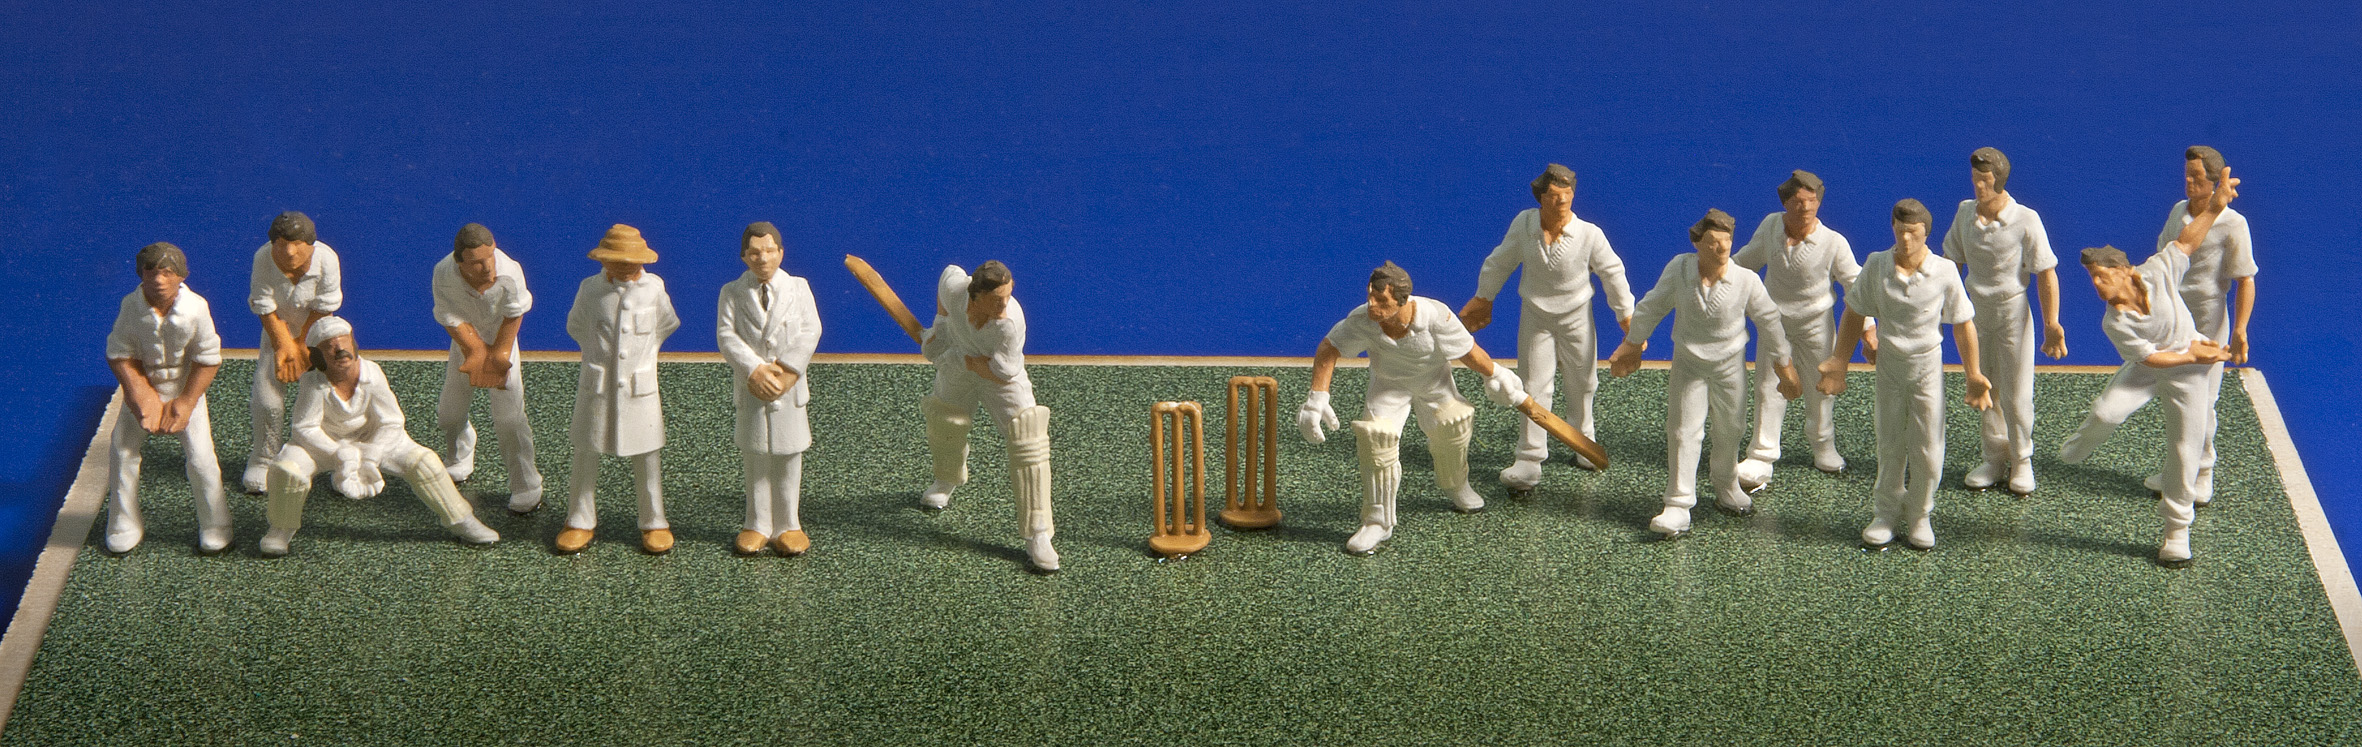 5300 Model scene Cricket Team